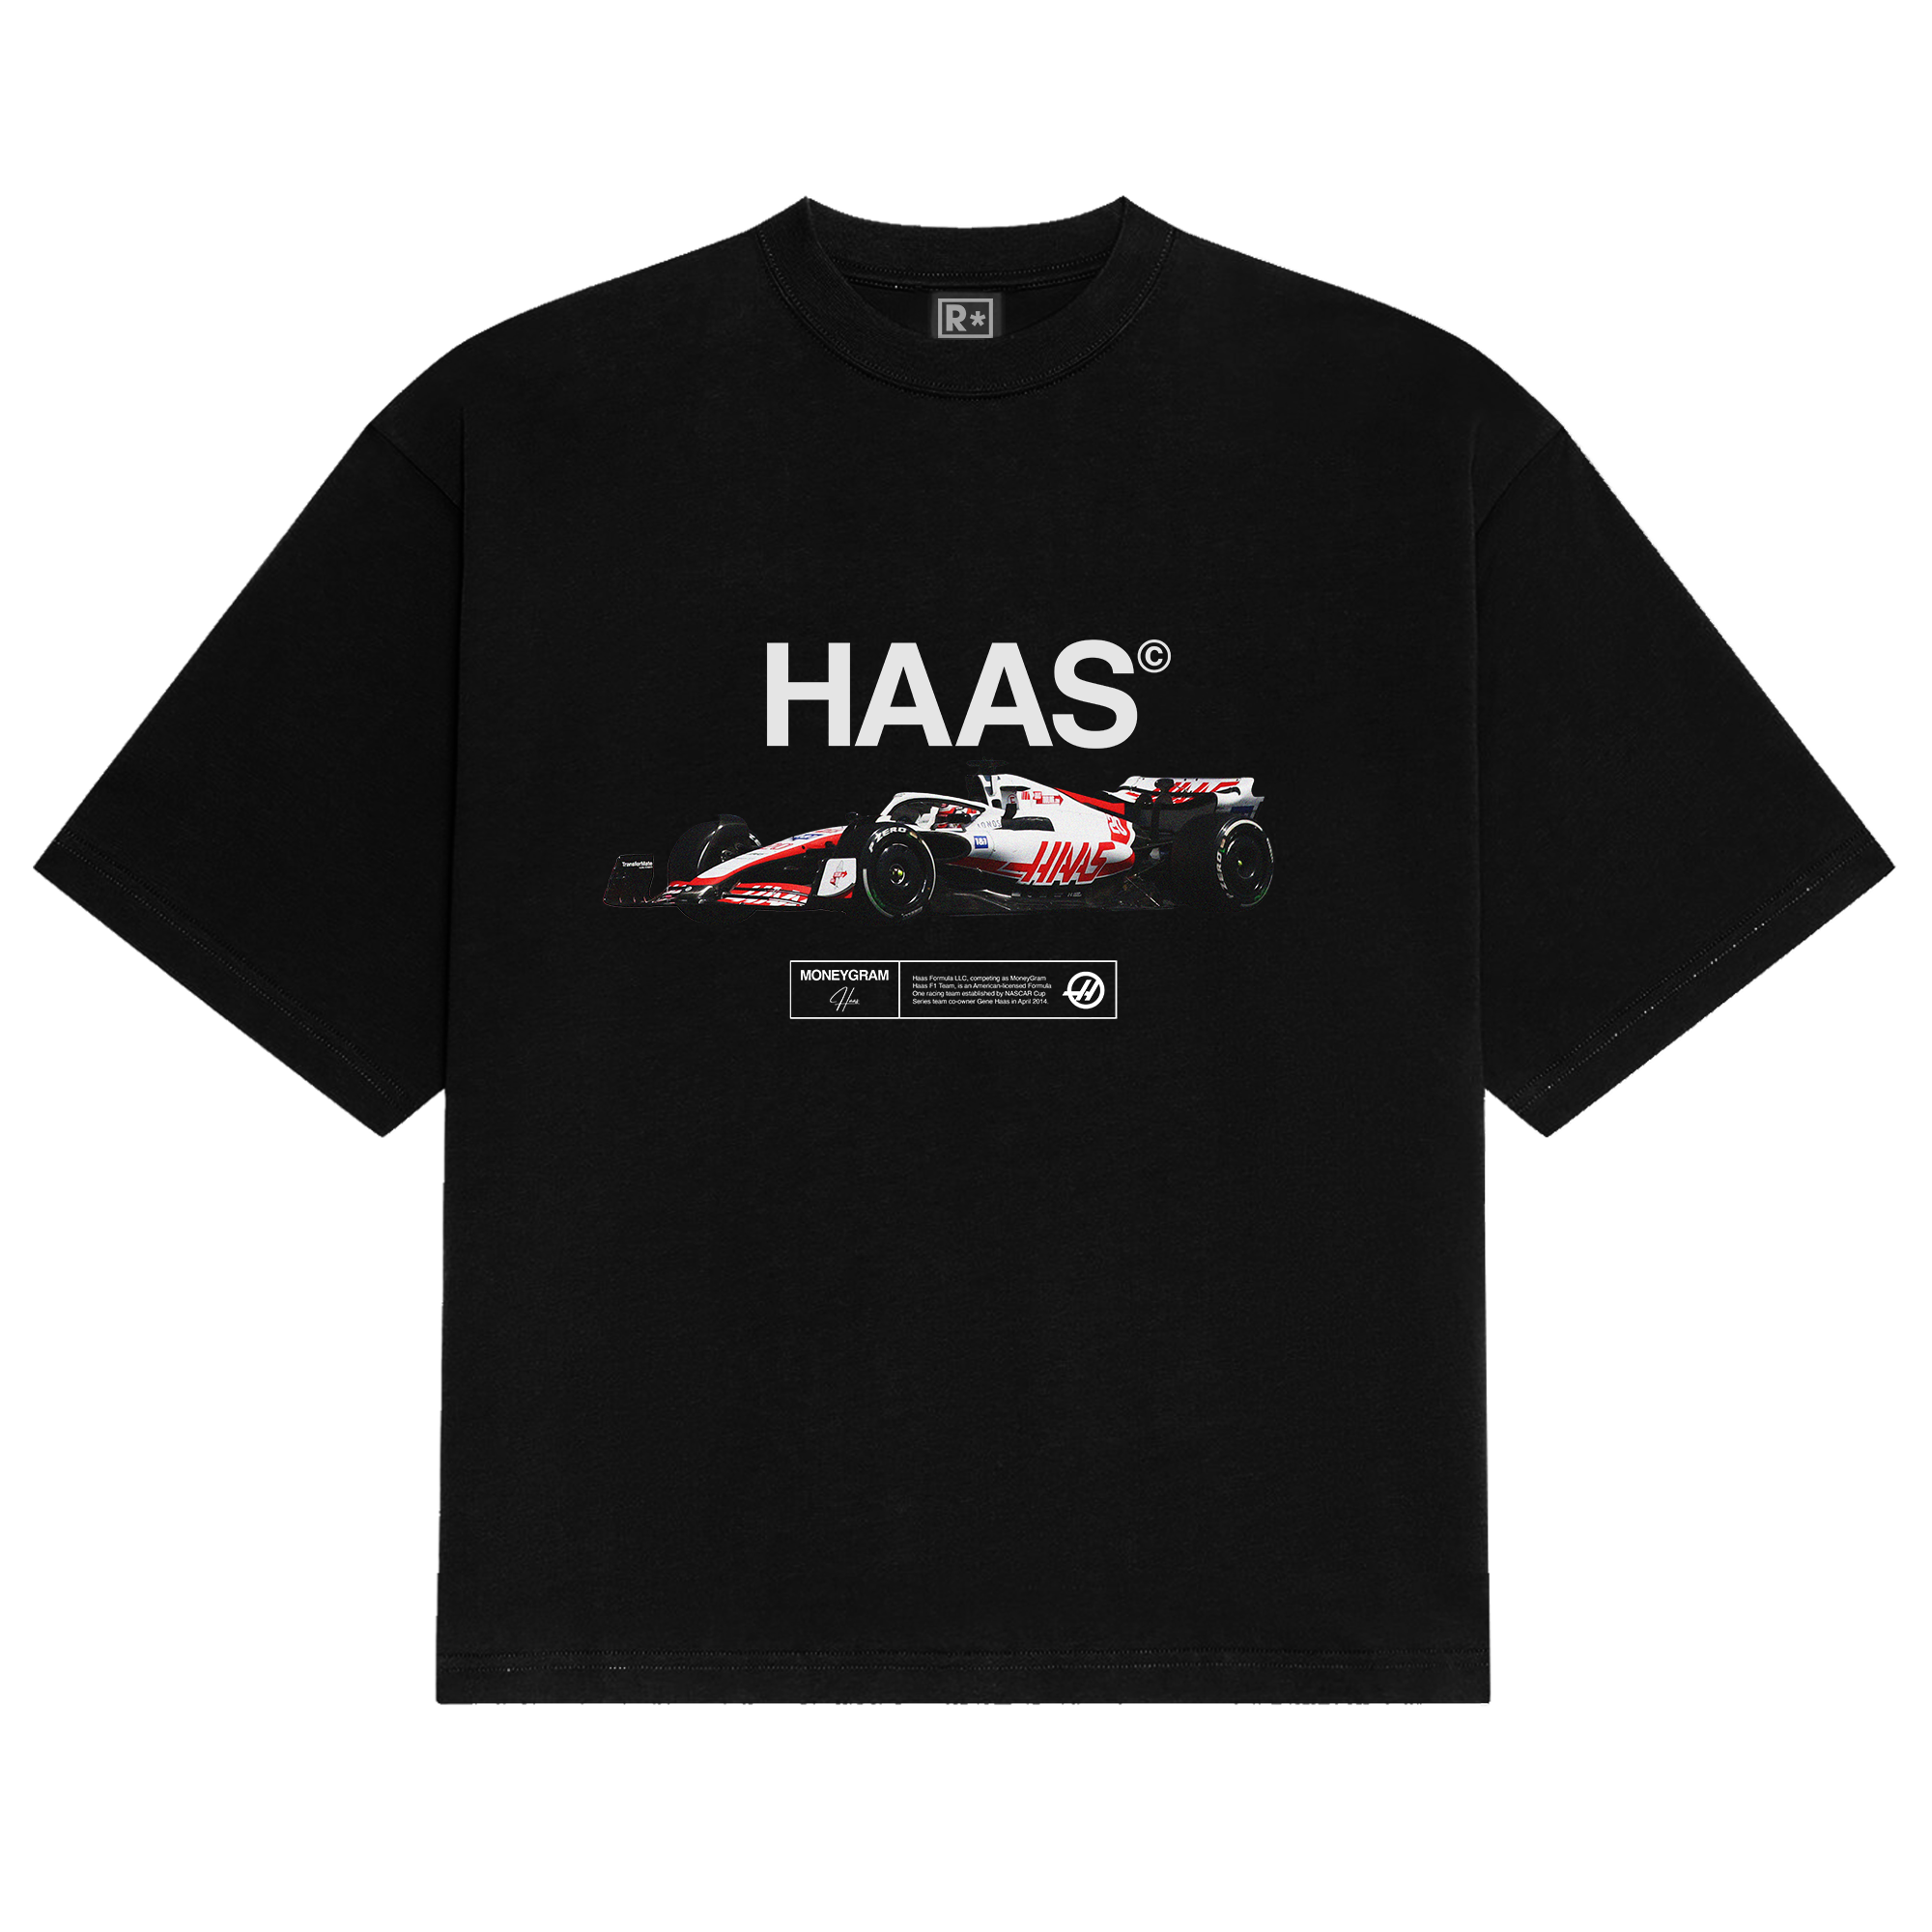 Haas F1 Team Tee